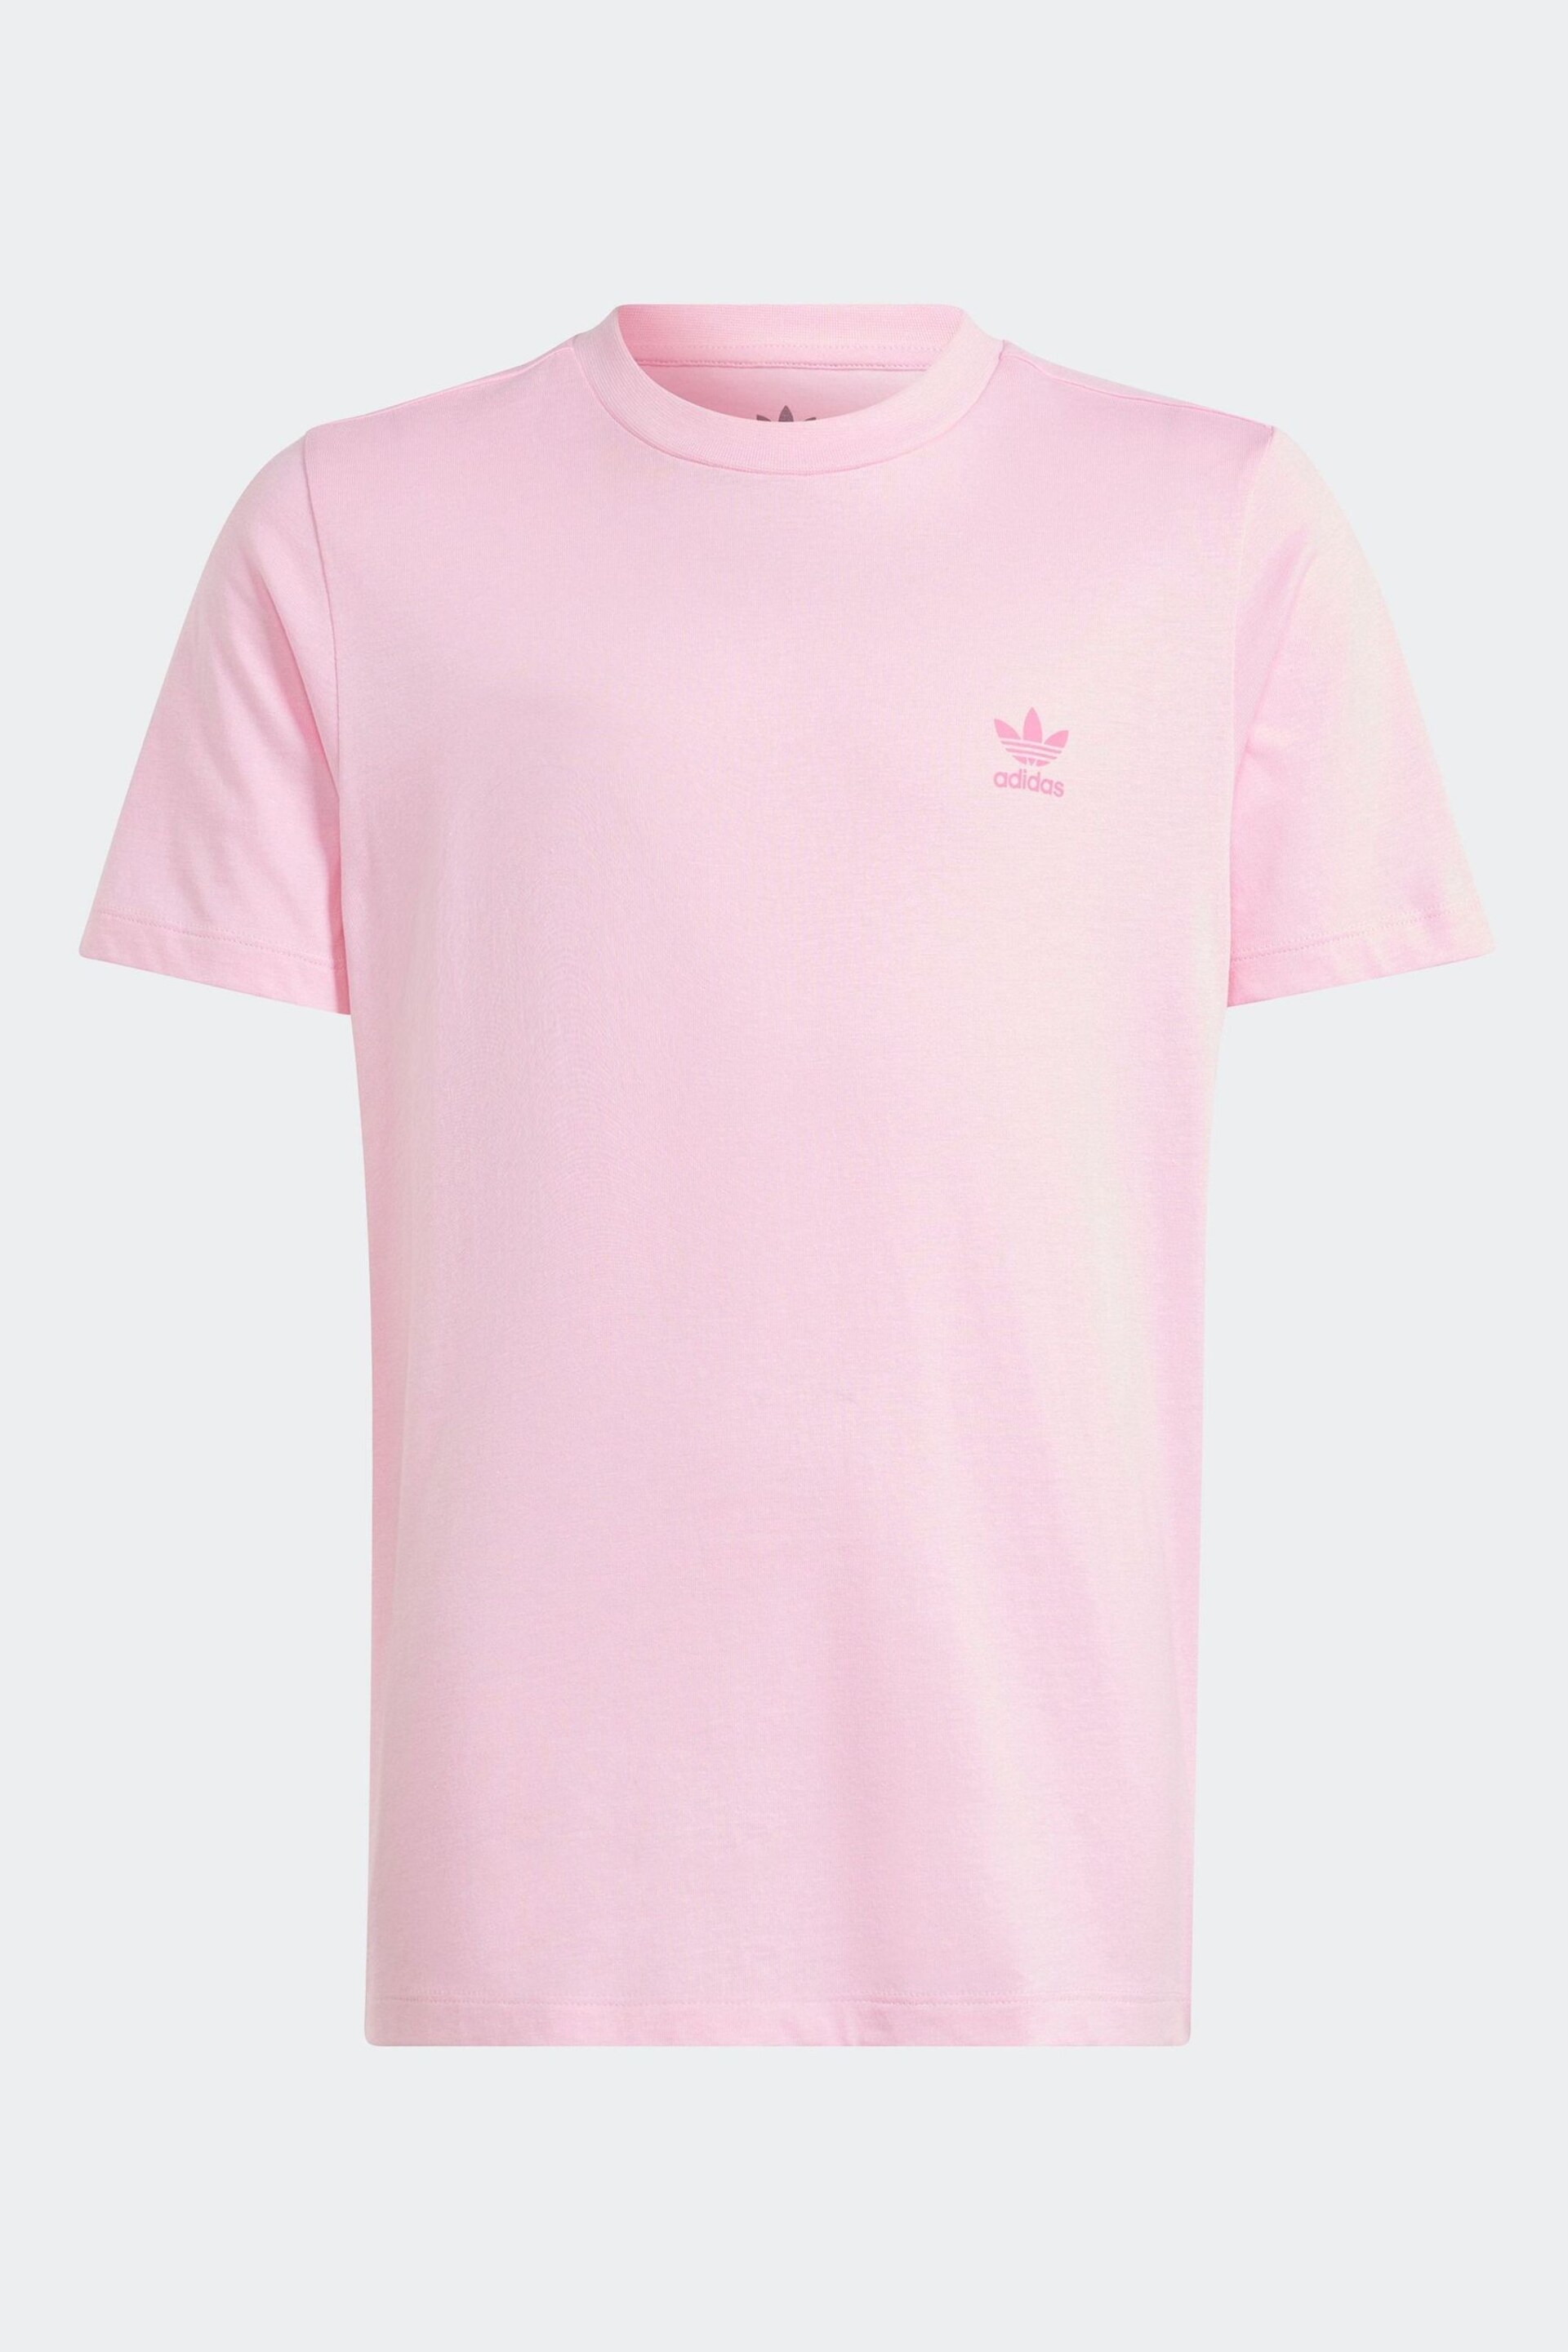 adidas Originals Light Pink Adicolor T-Shirt - Image 1 of 5